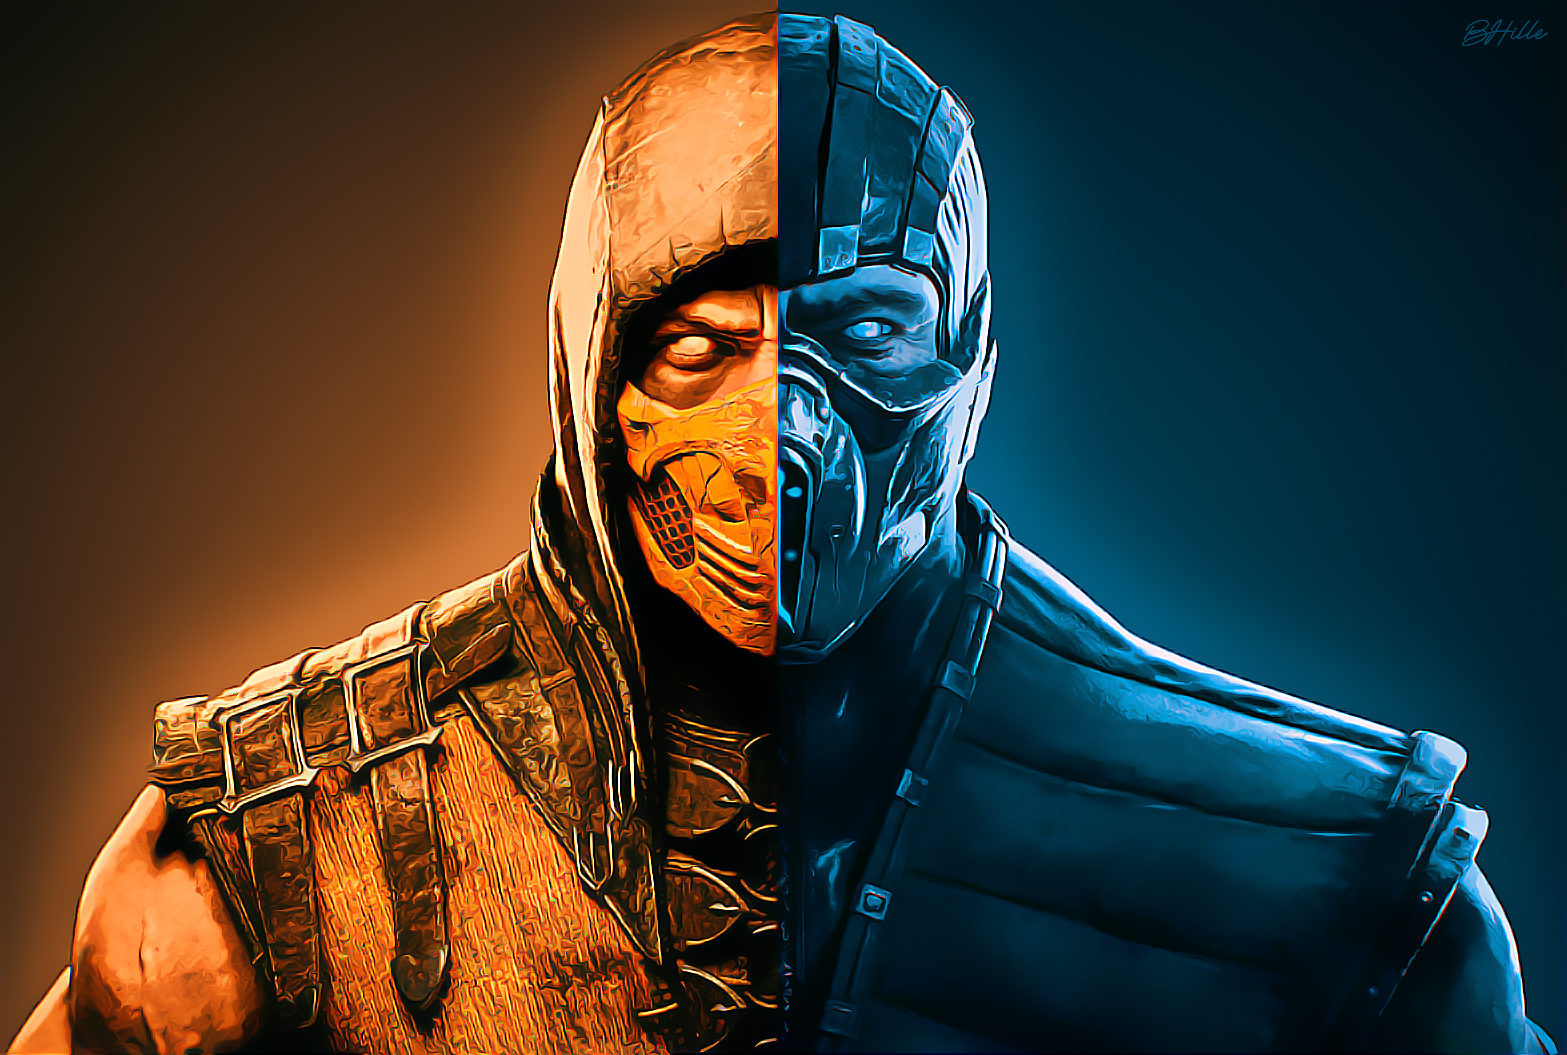 Mortal Kombat X - Scorpion and Sub Zero by BernardoHille on DeviantArt